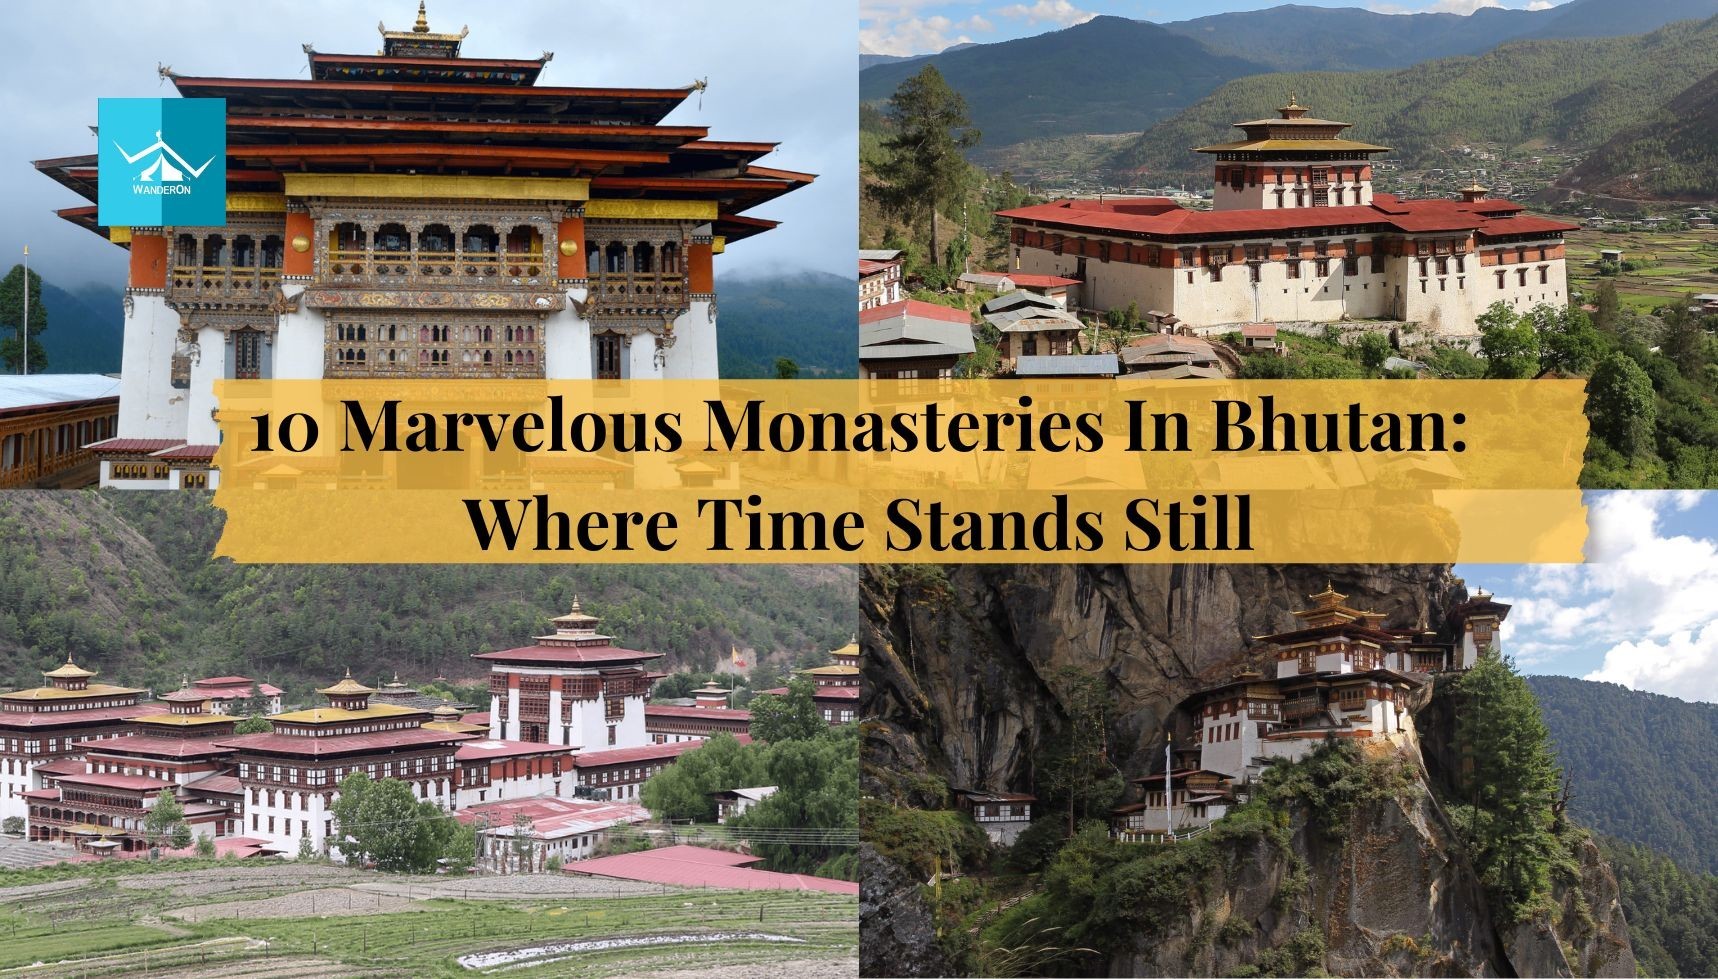 10 Marvelous Monasteries in Bhutan: Where Time Stands Still